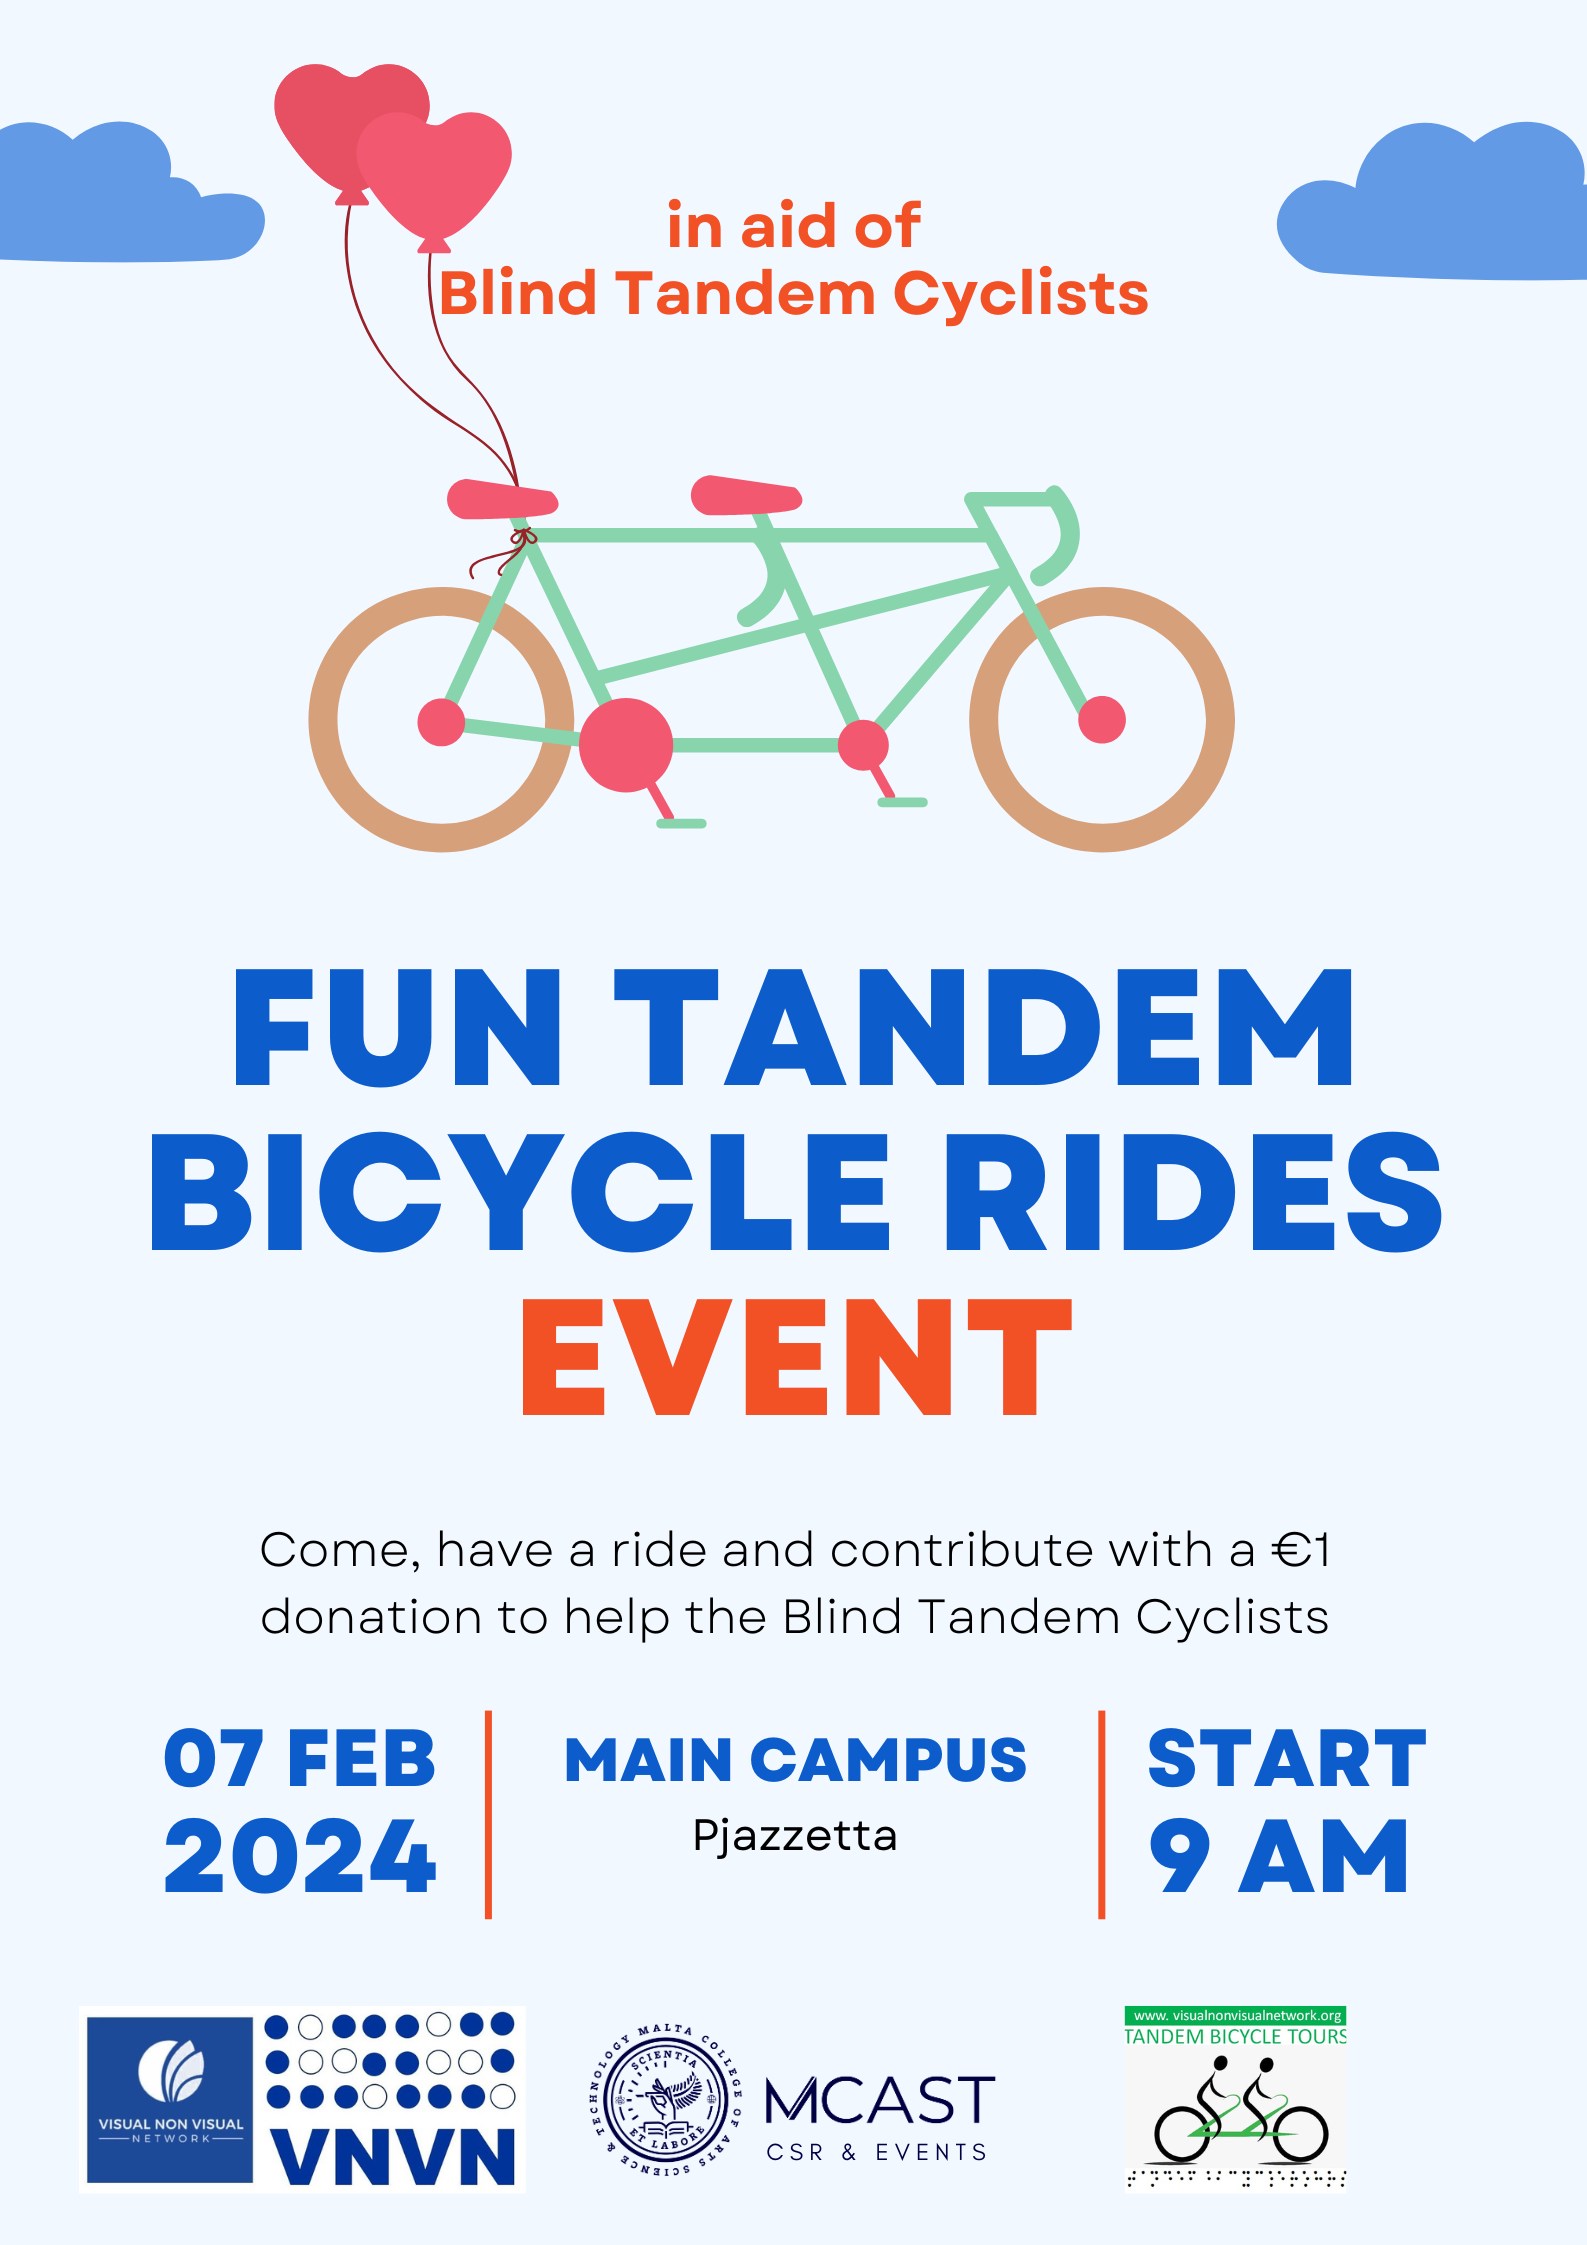 FUN TANDEM BICYCLE RIDES EVENT